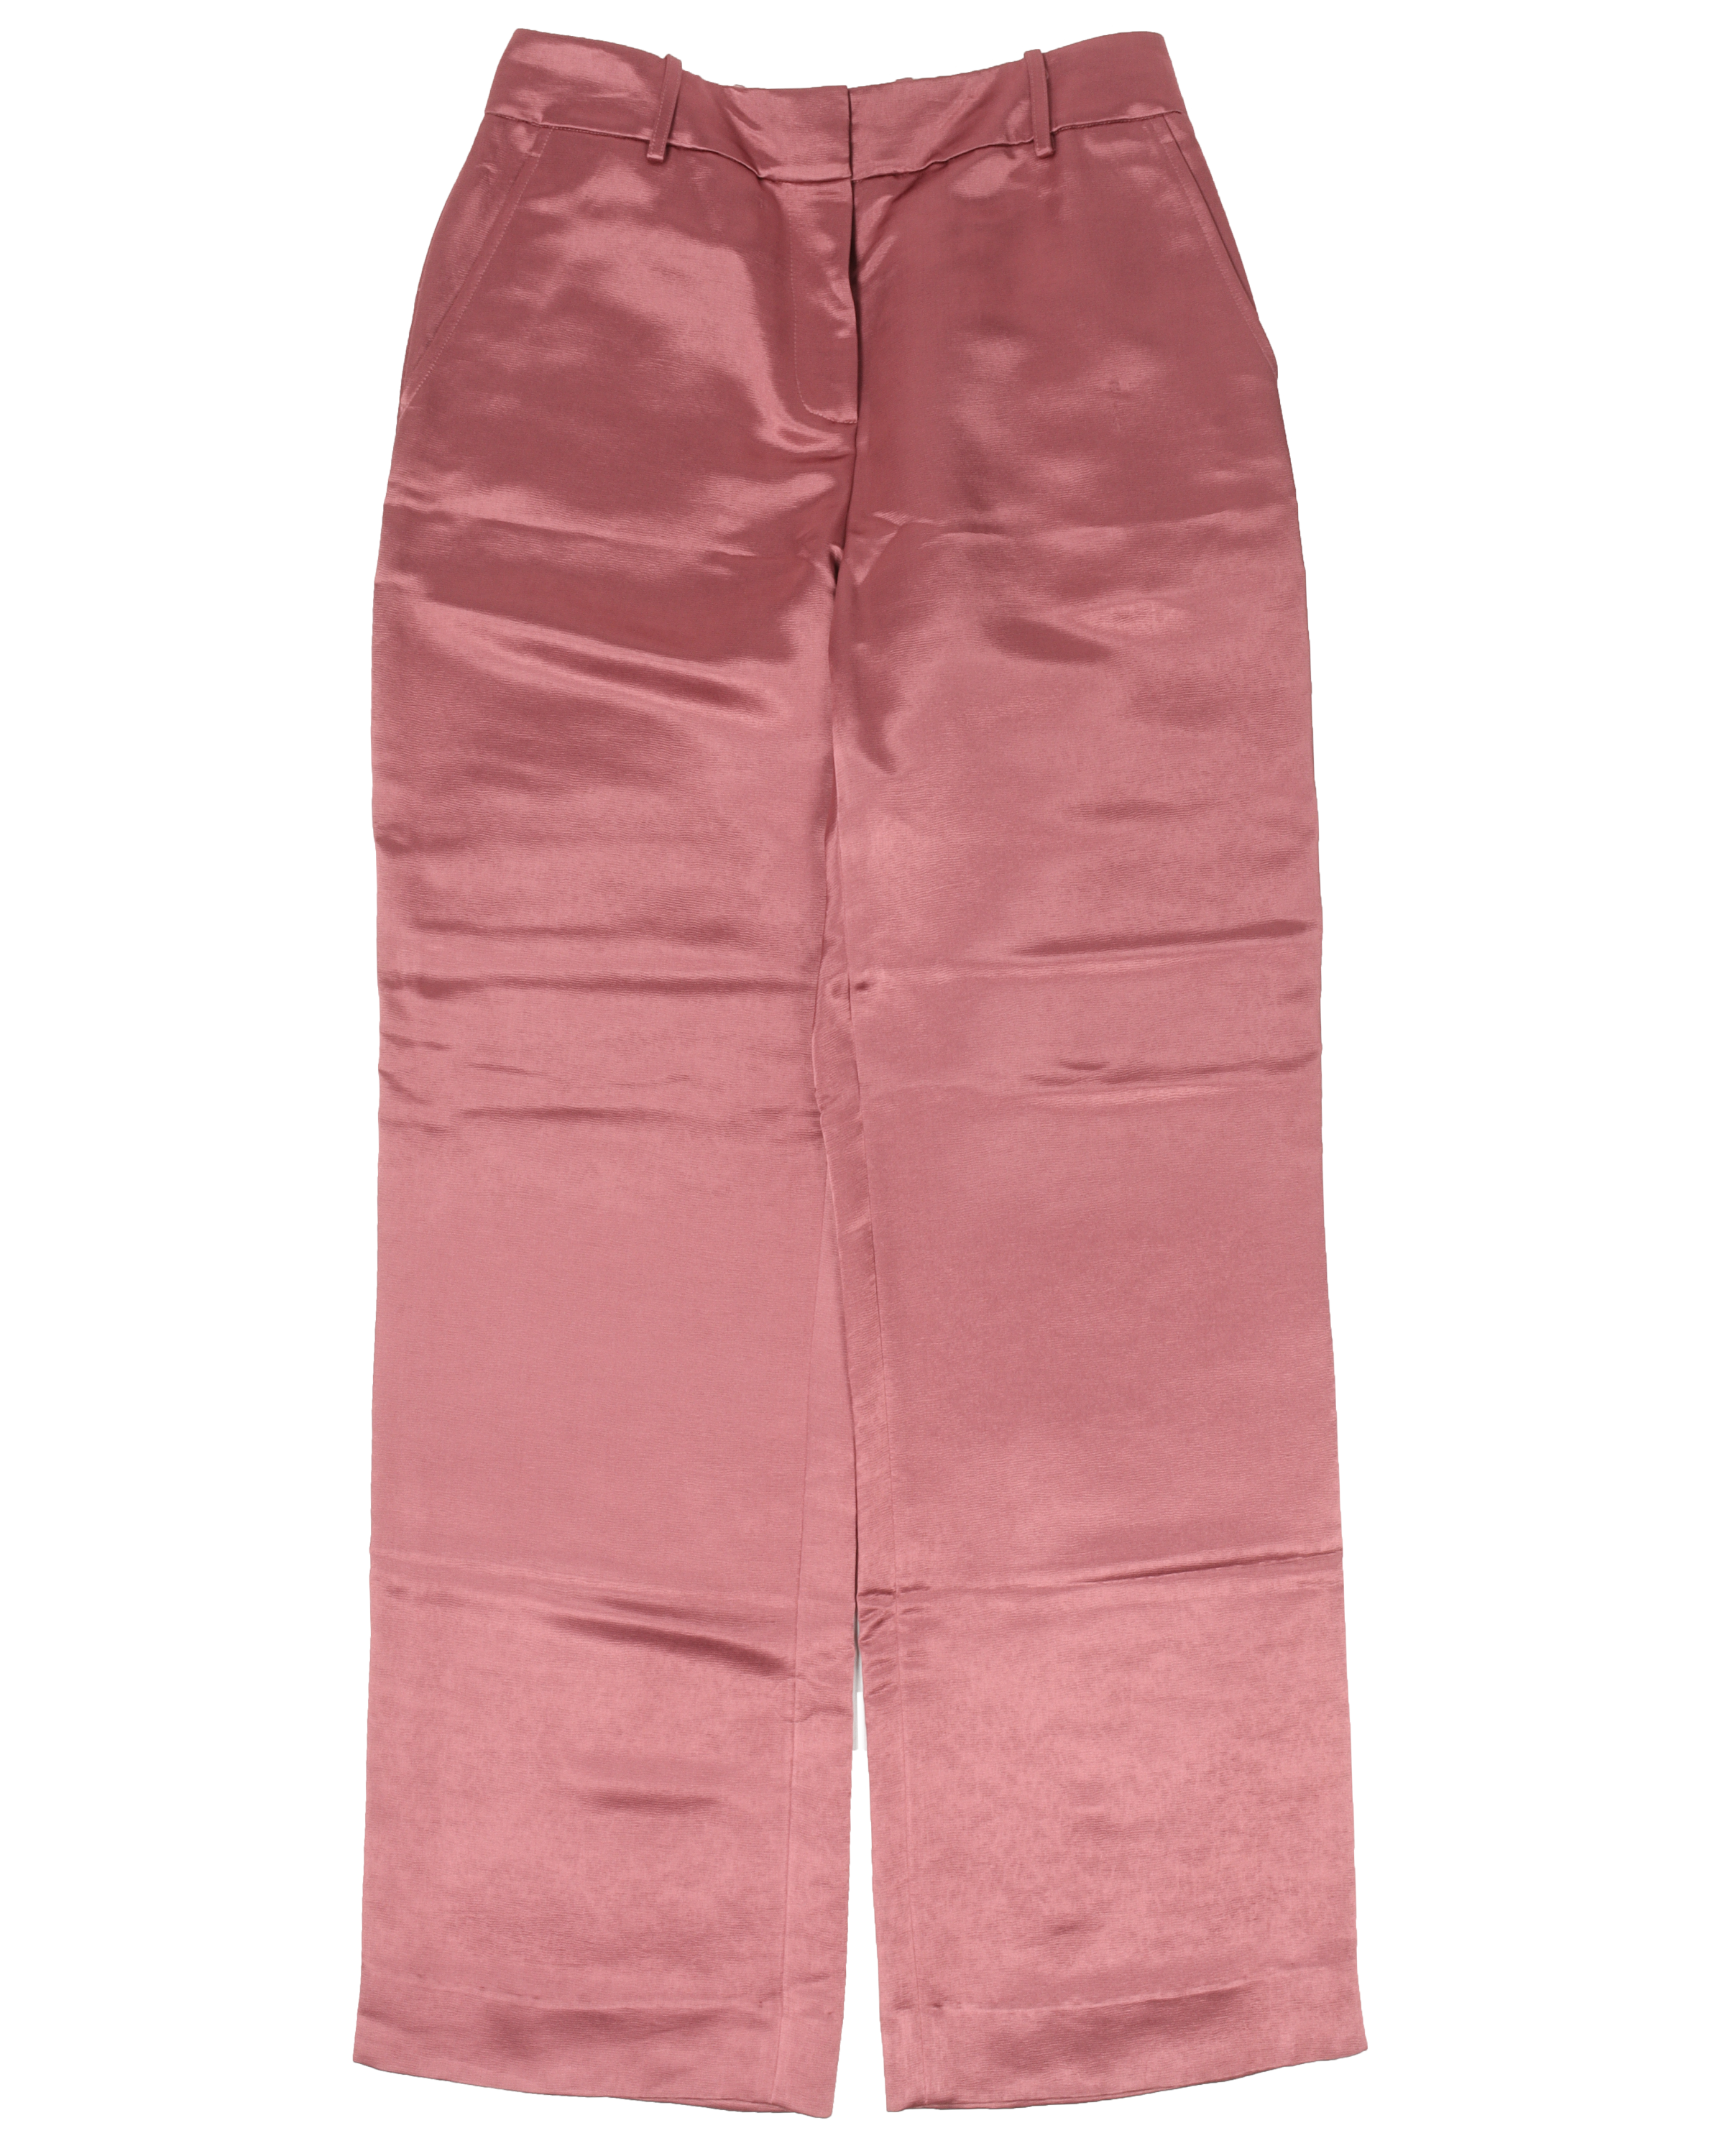 Satin Pink Pants